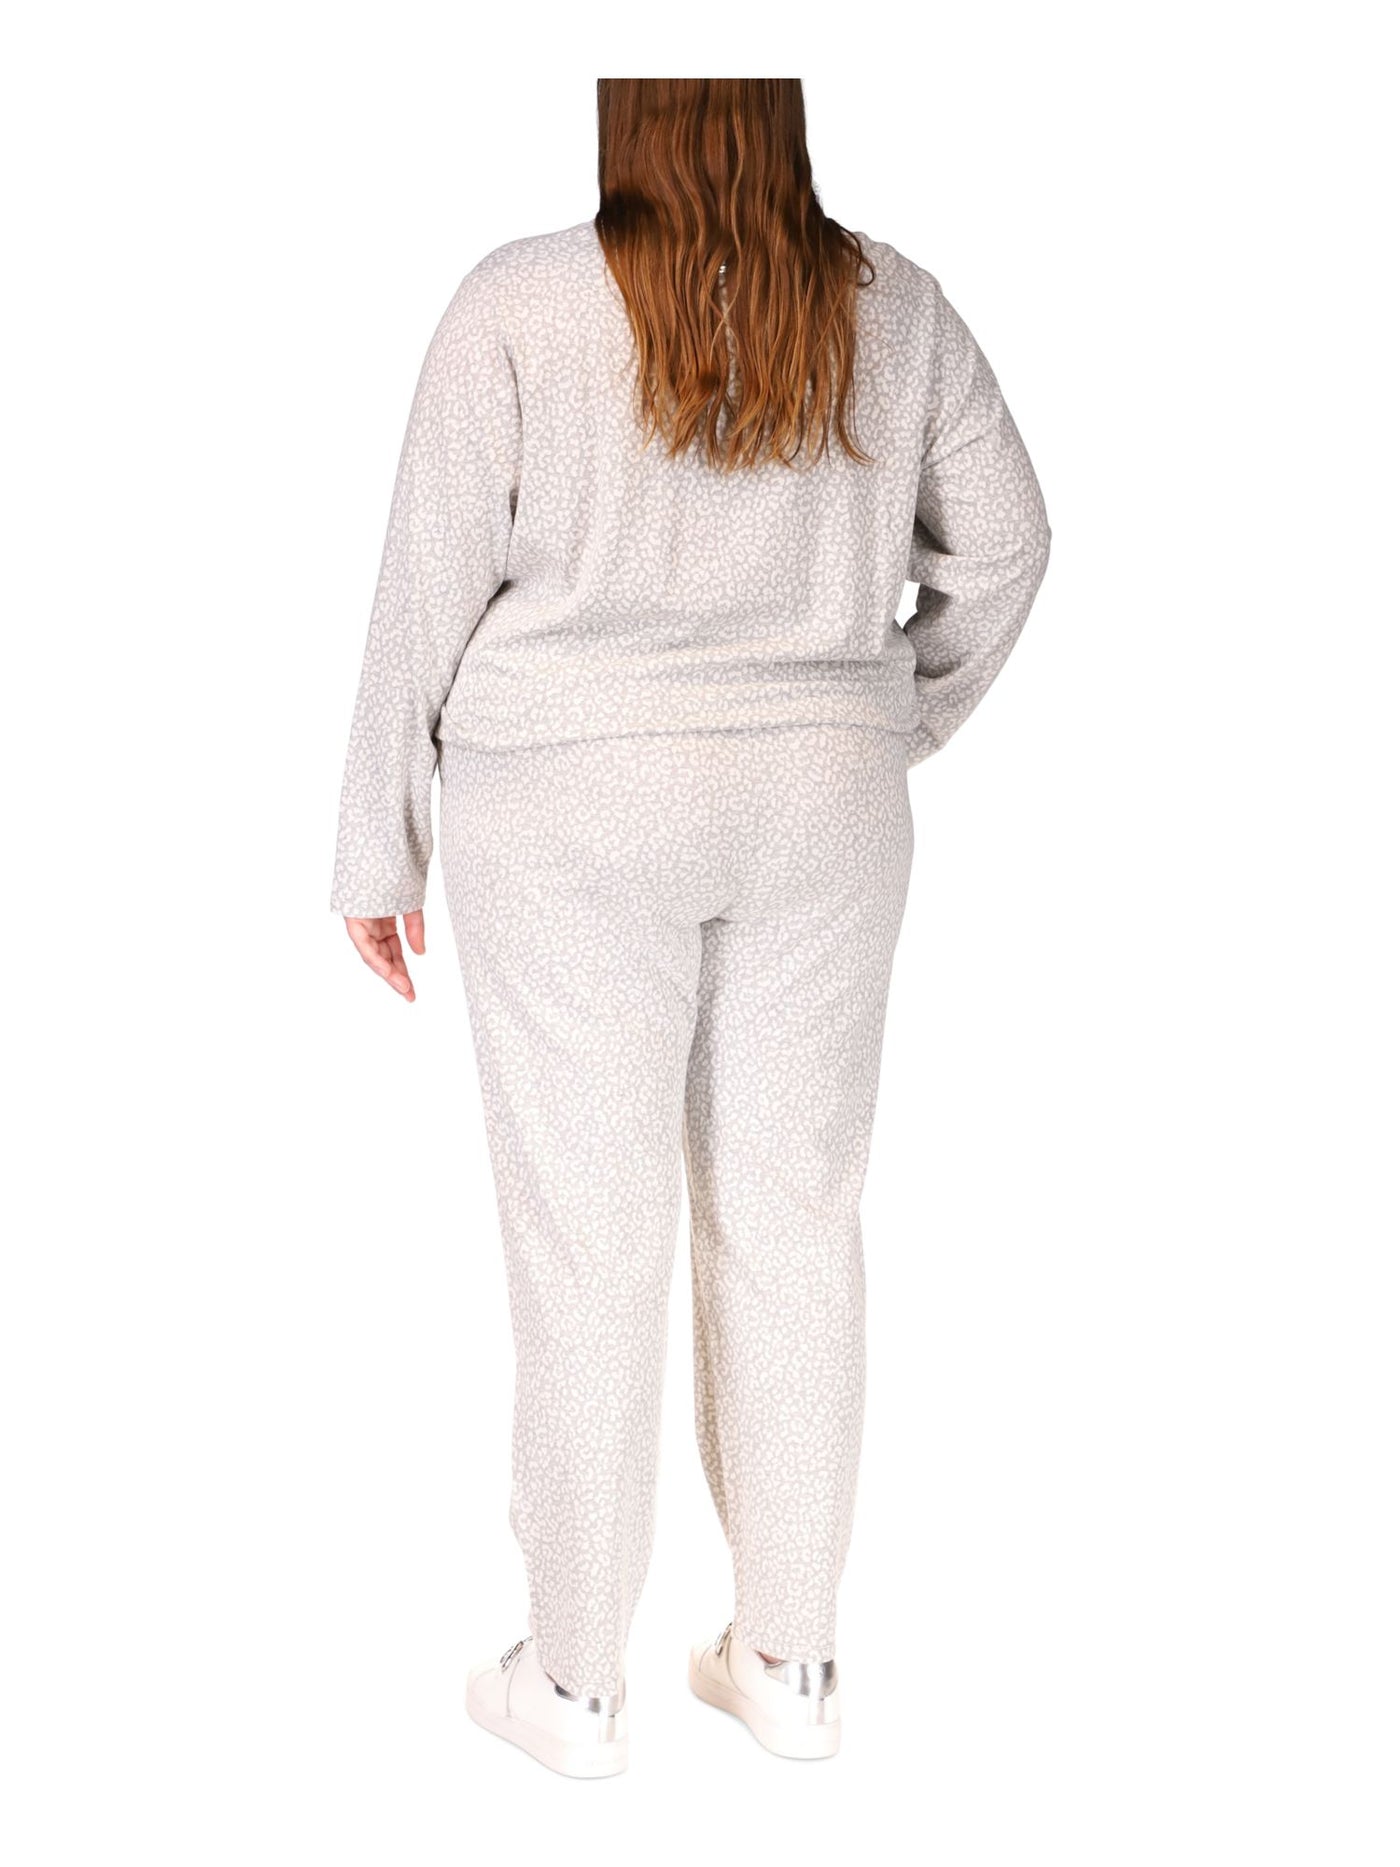 MICHAEL KORS Womens Gray Animal Print Long Sleeve Crew Neck T-Shirt Plus 0X